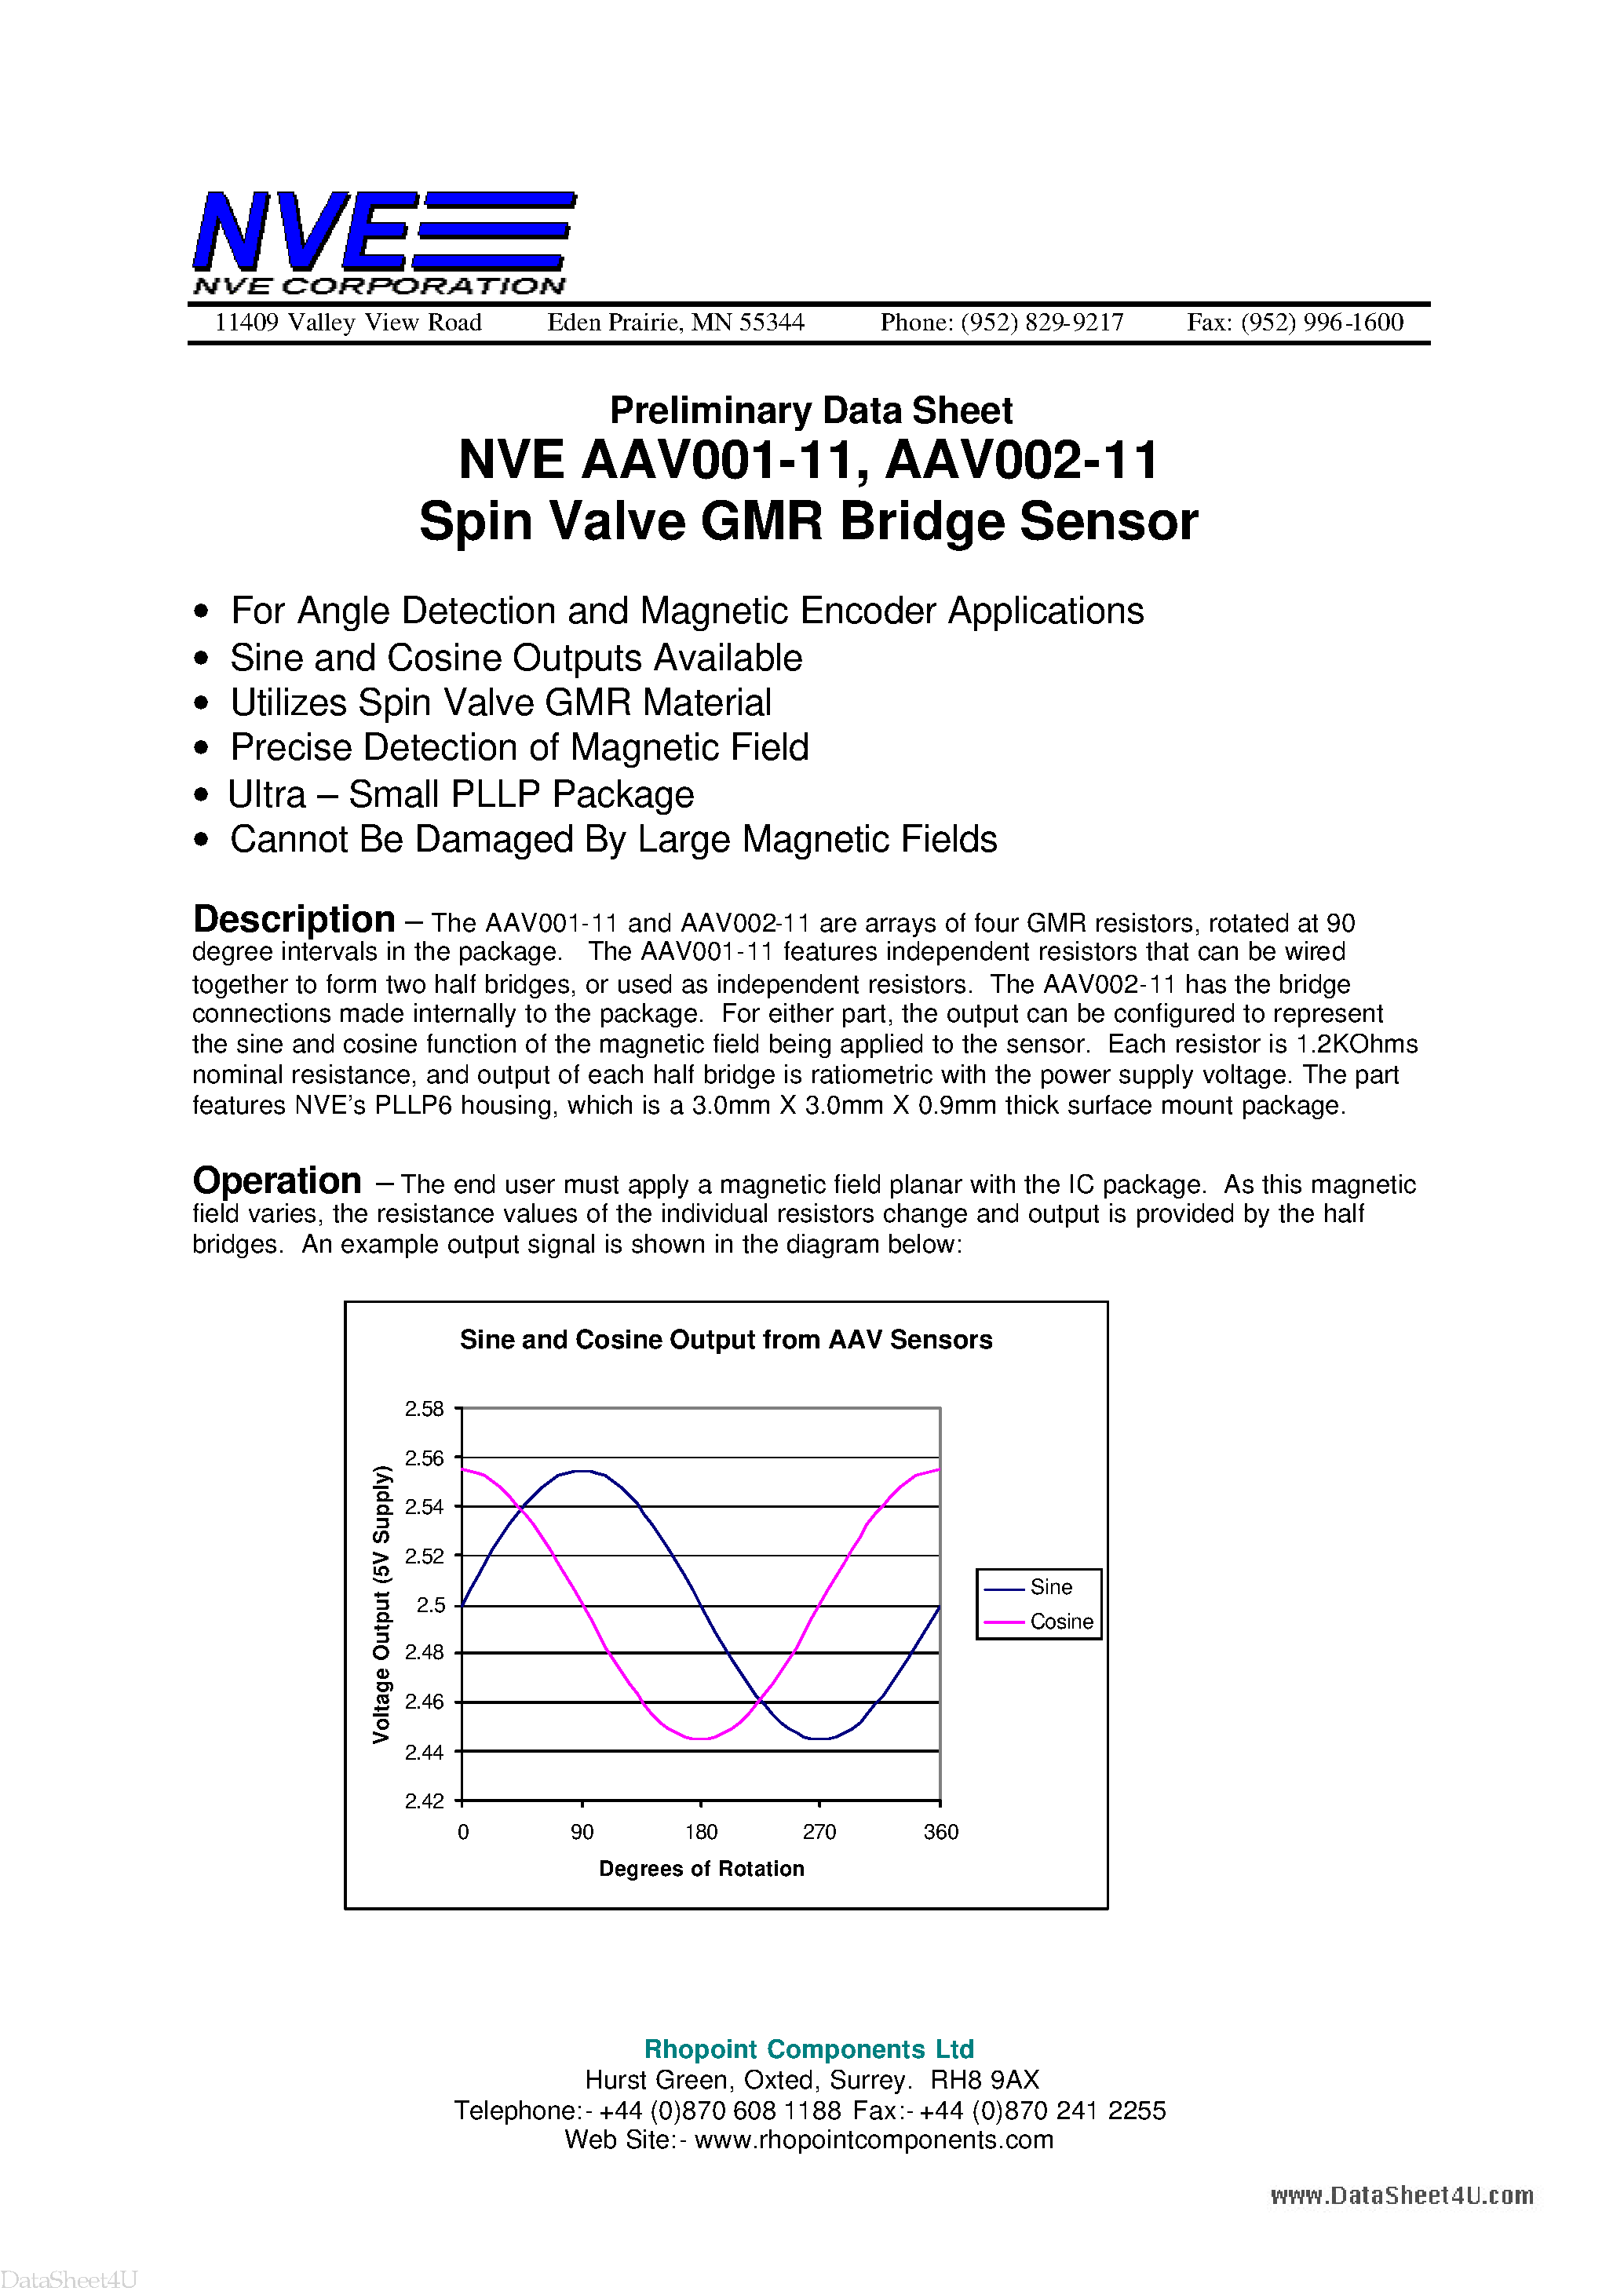 Даташит AAV001-11 - (AAV001-11 / AAV002-11) Spin Valve GMR Bridge Sensor страница 1